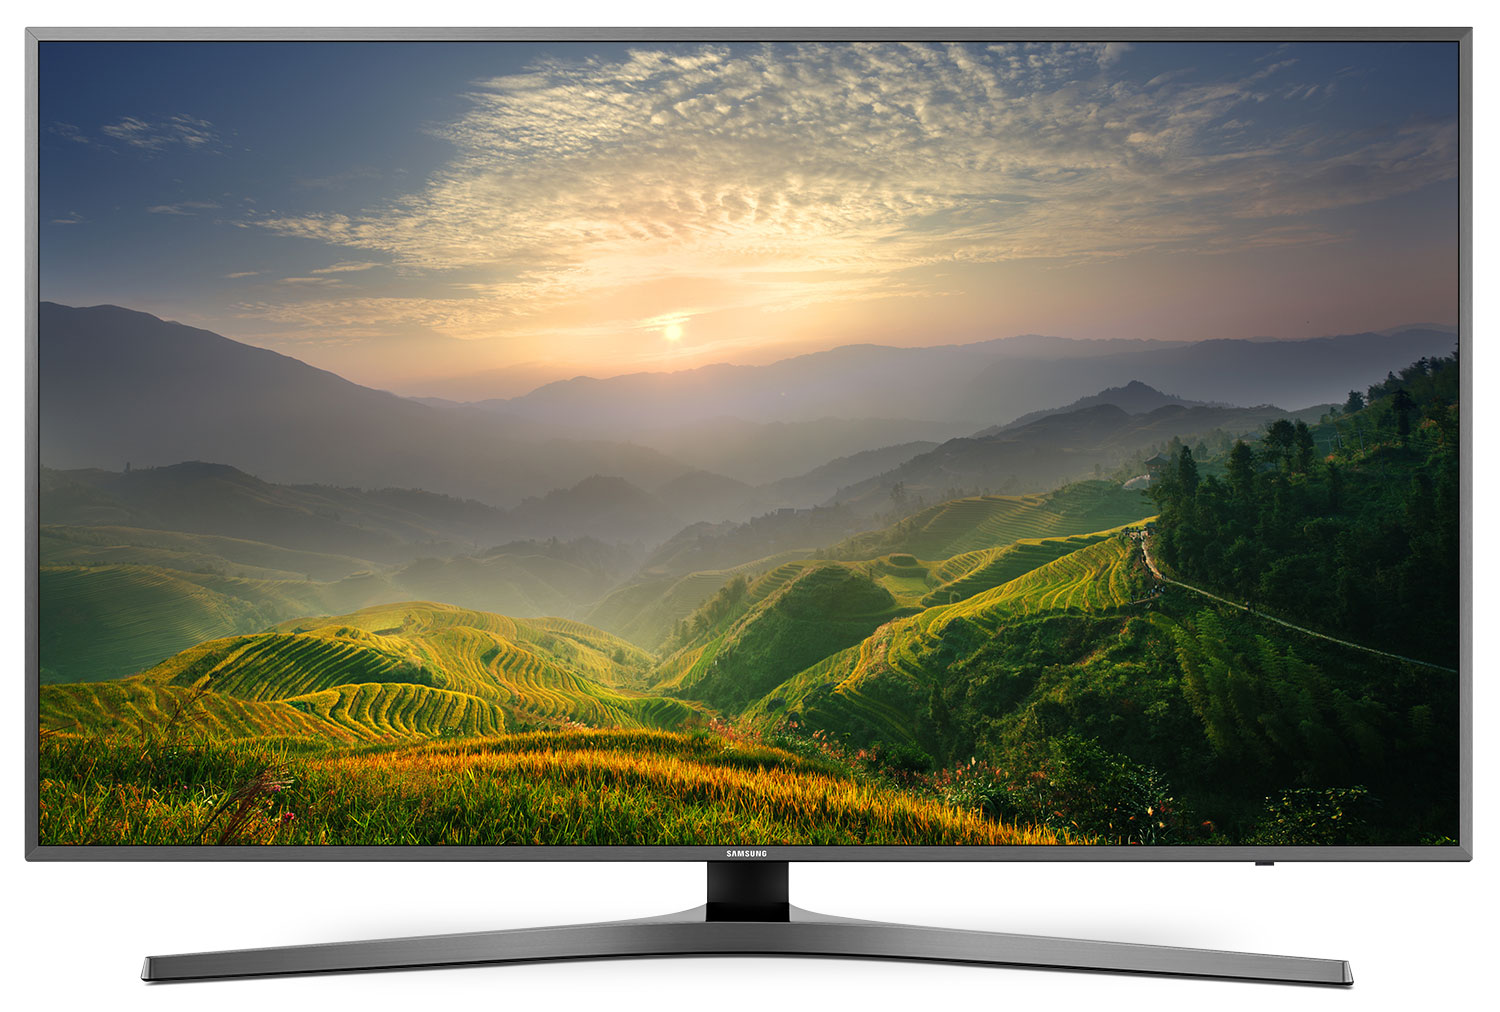 Samsung 32t5300 Smart Tv